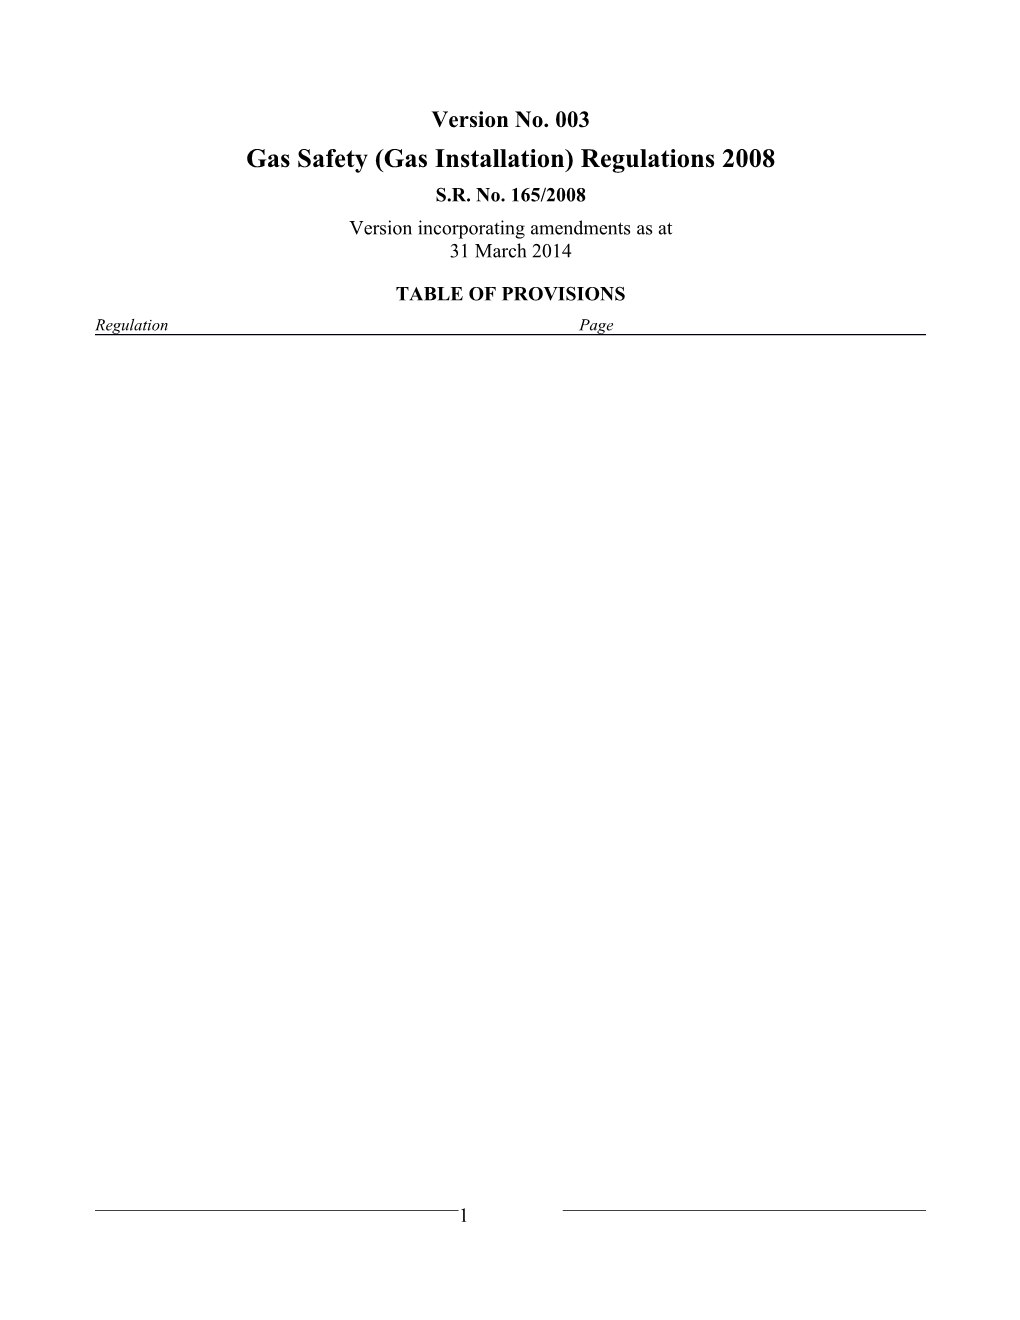 Gas Safety (Gas Installation) Regulations 2008